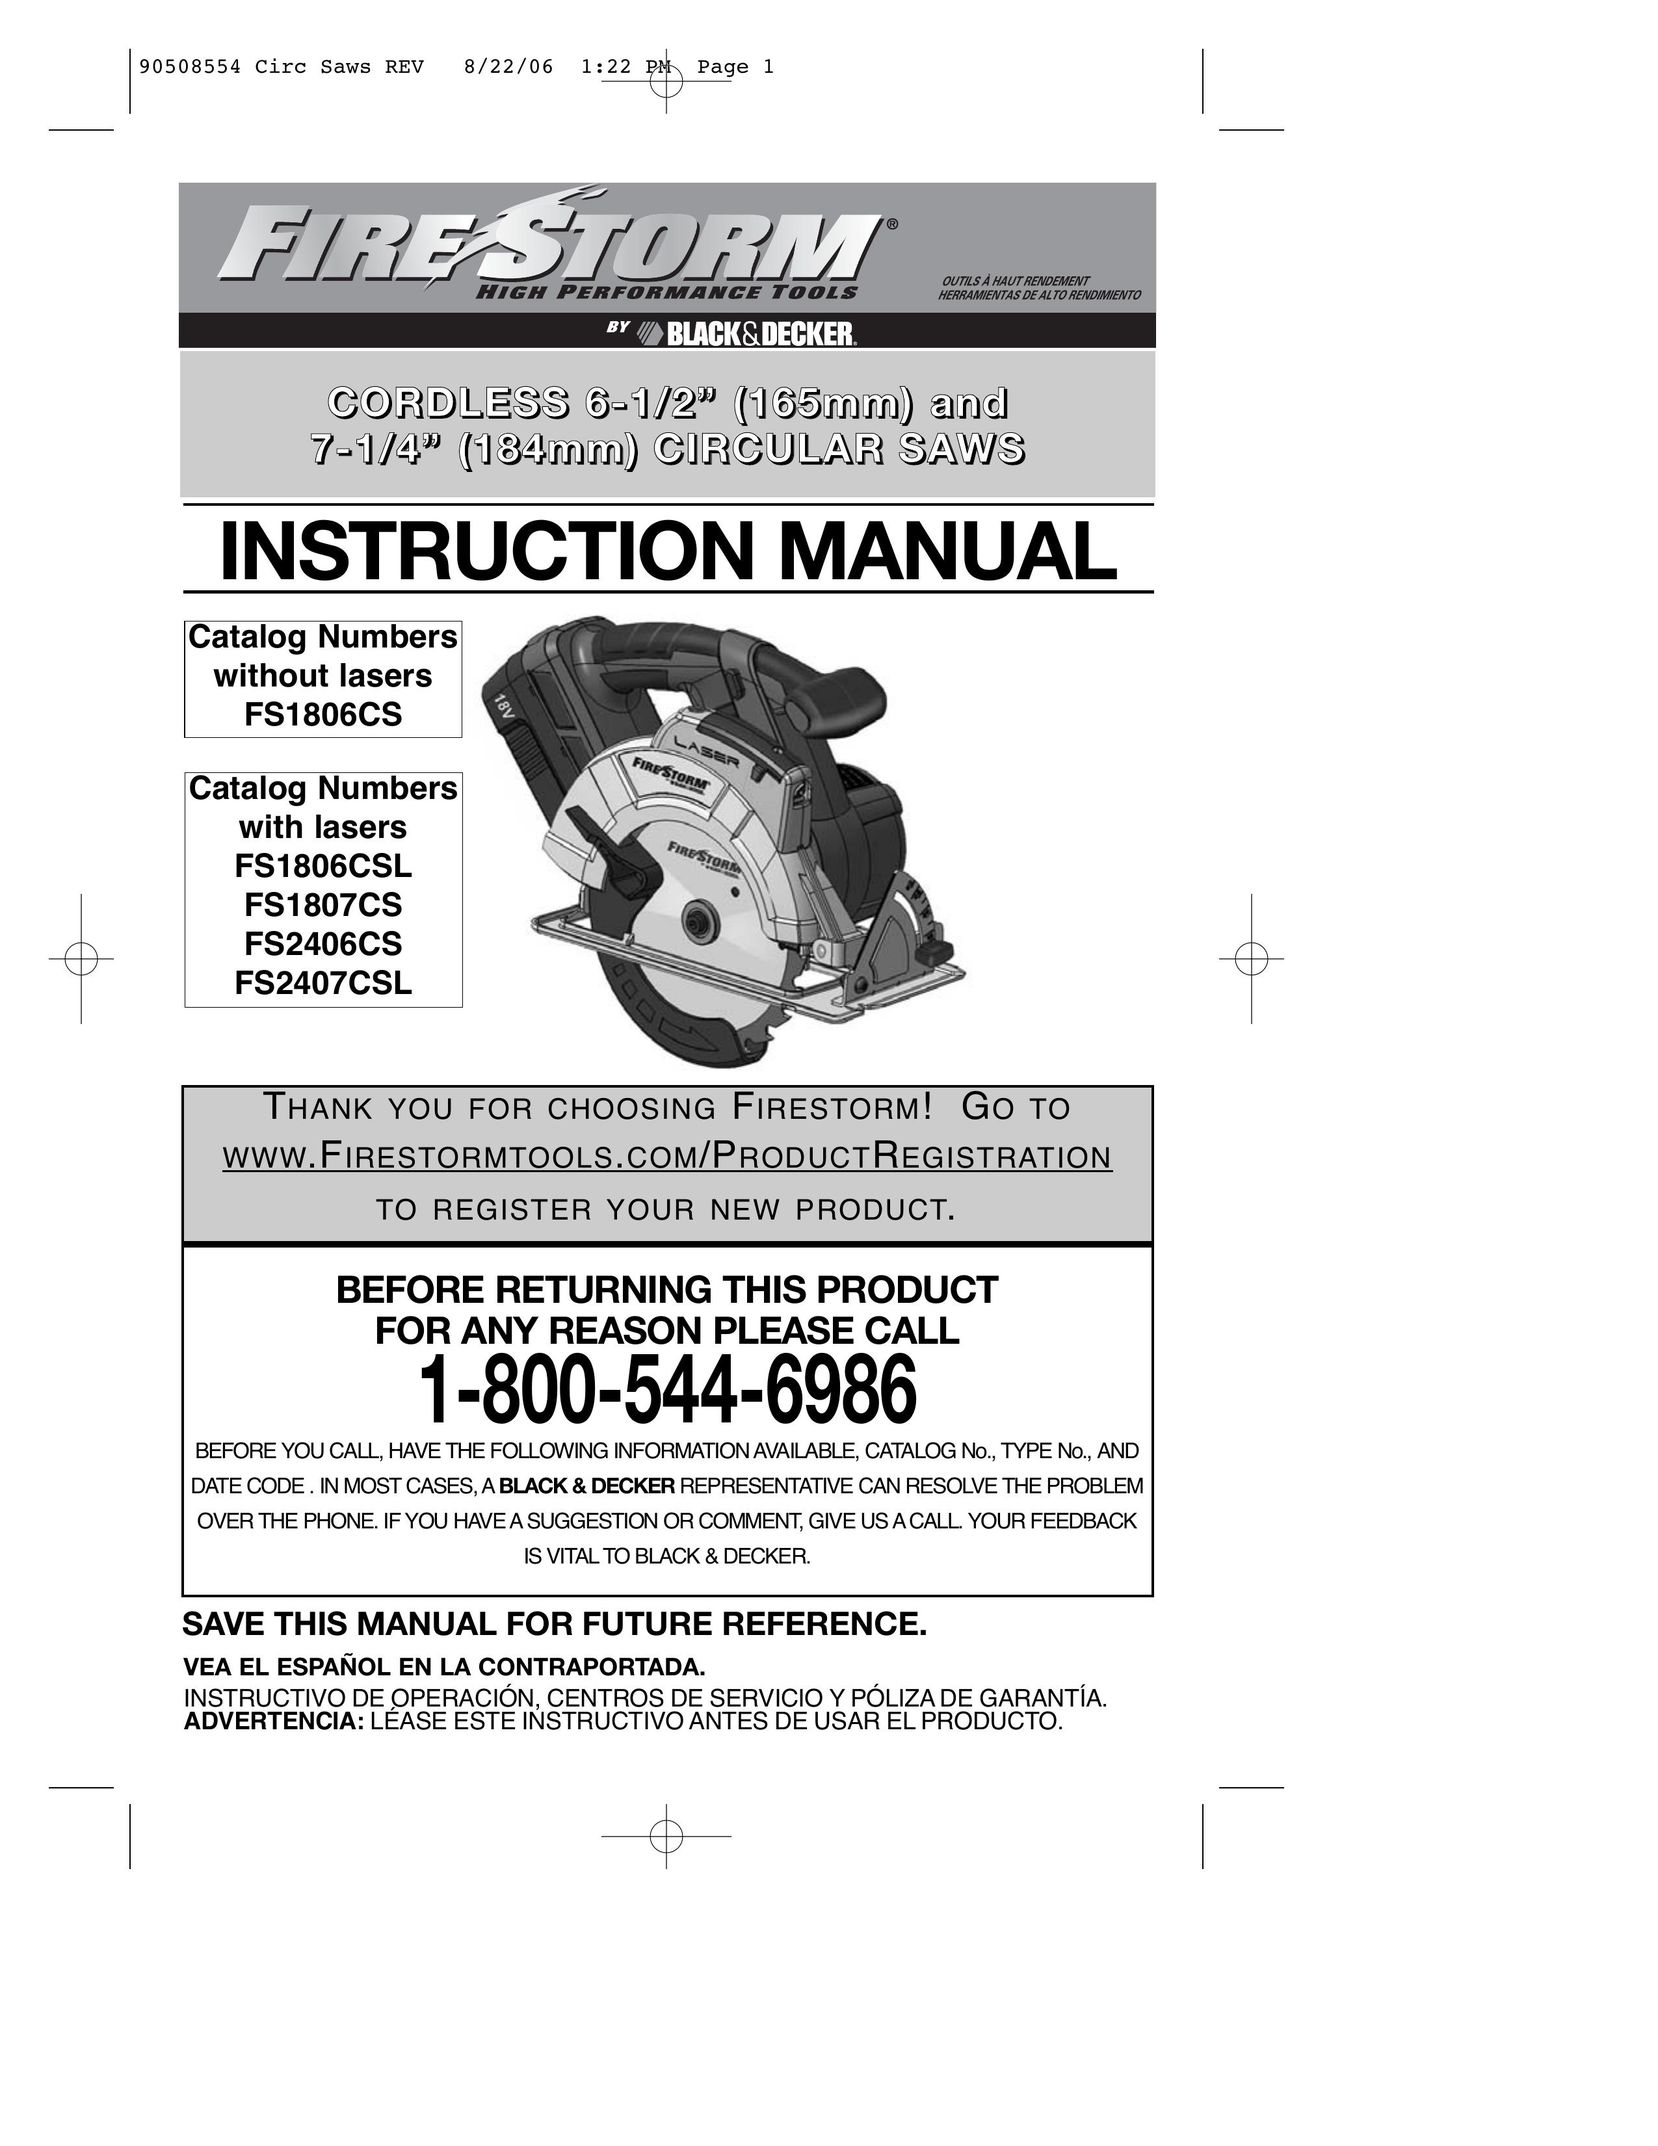 Black & Decker FS1806CSL Cordless Saw User Manual